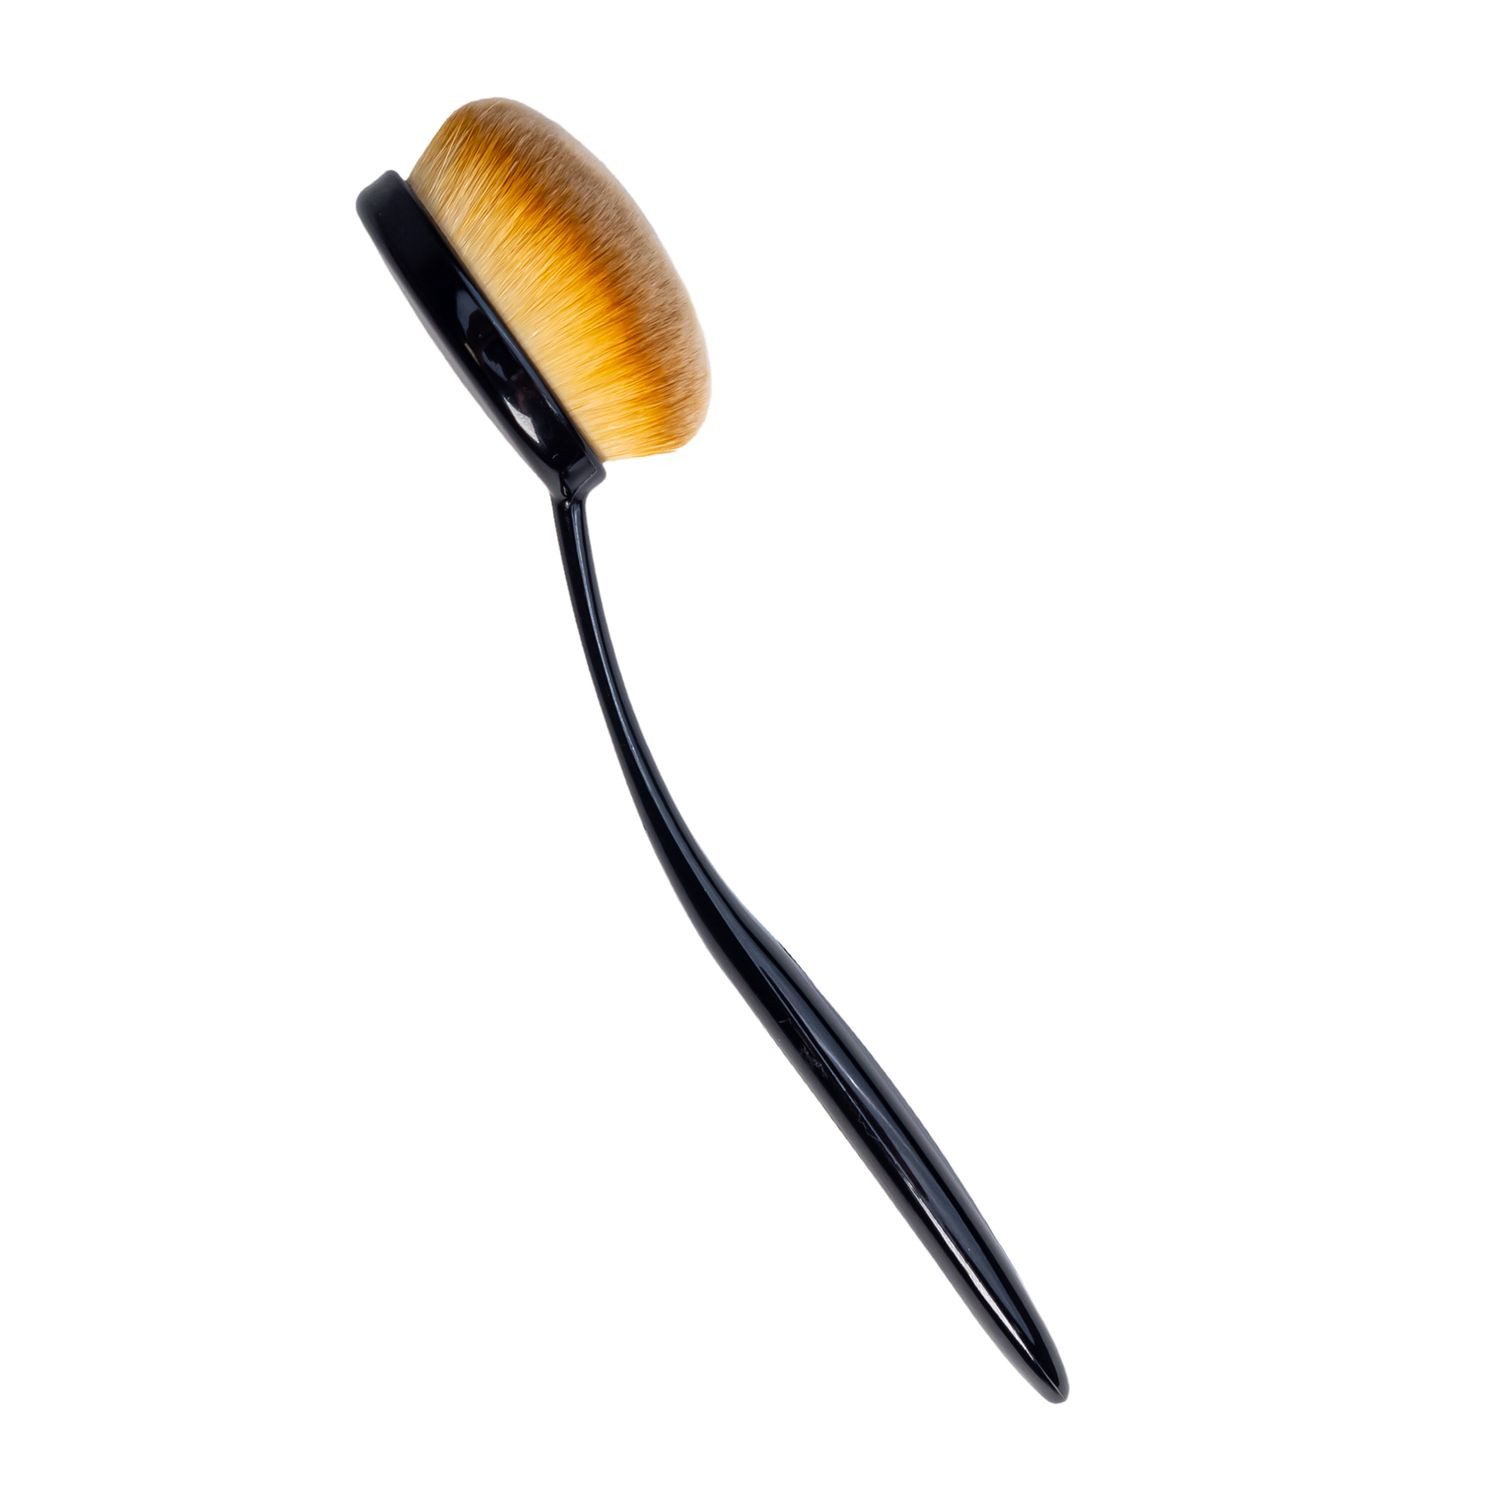 Intirilife Kosmetikpinsel-Set, 1 tlg., Make Up Pinsel Oval in Größe 2 - Pinsel Durchmesser 3.5 cm